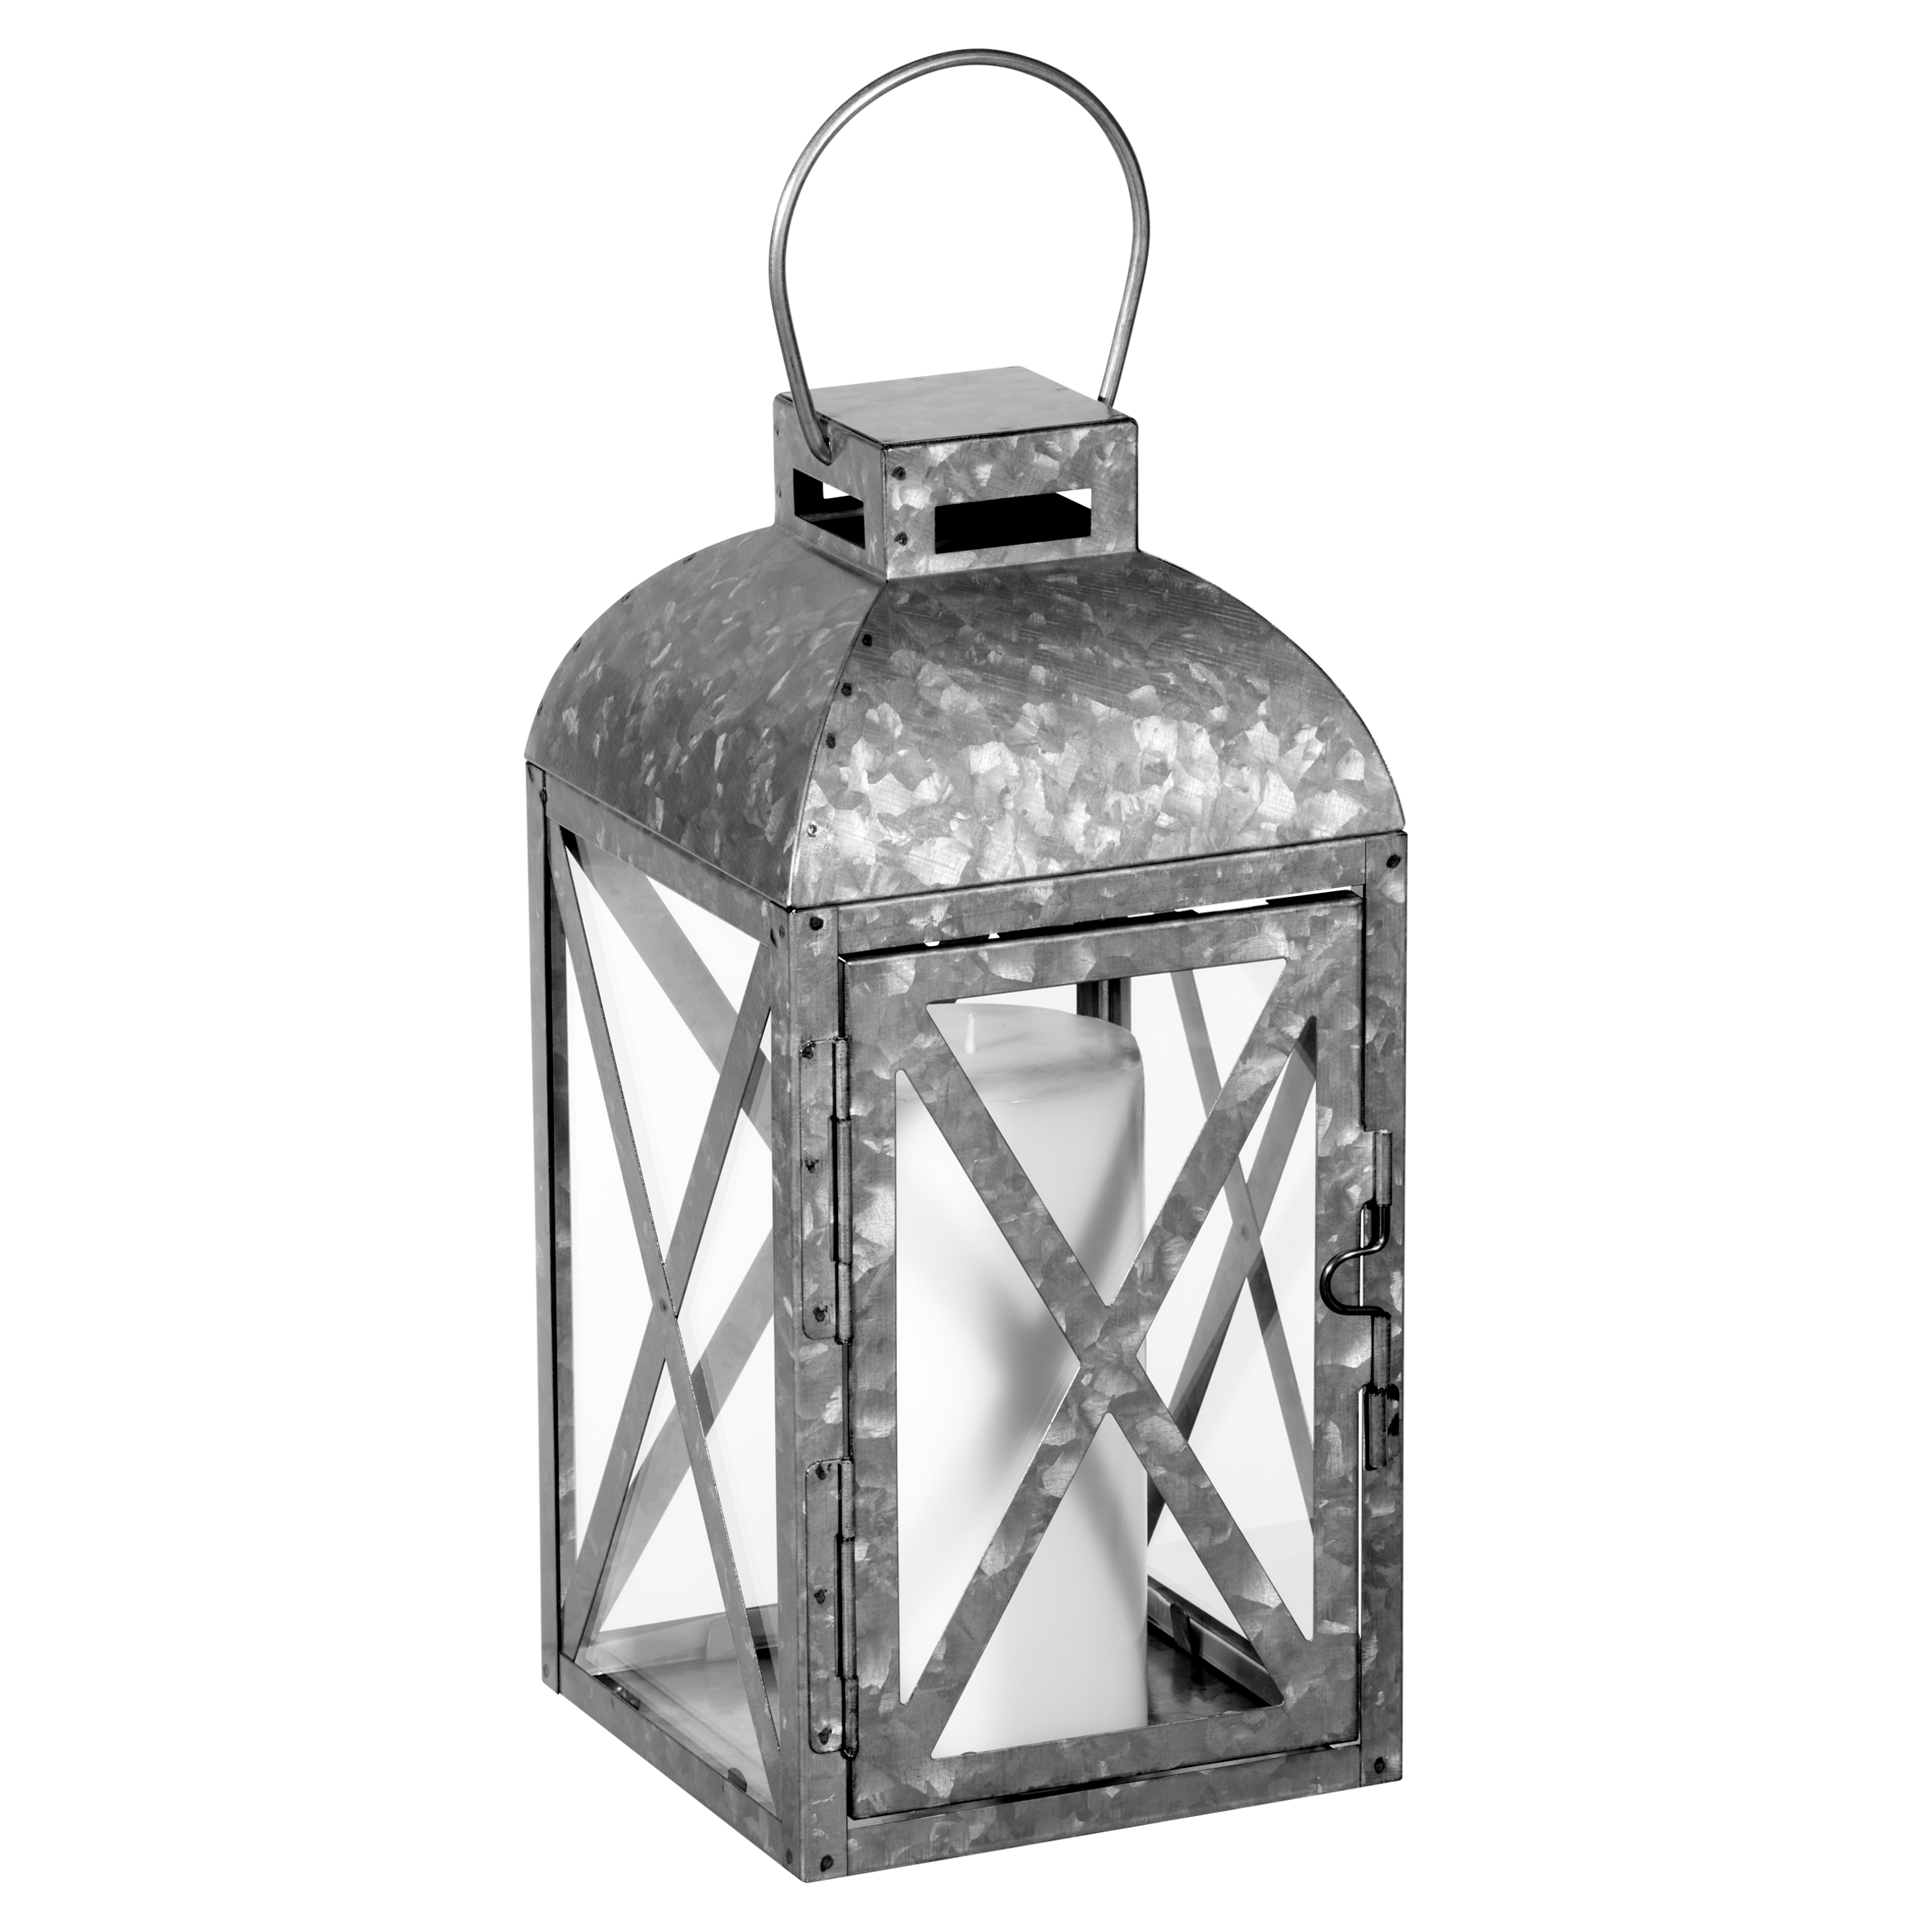 Mainstays Medium Galvanized Metal Candle Holder Lantern, Antique Gray - image 3 of 6